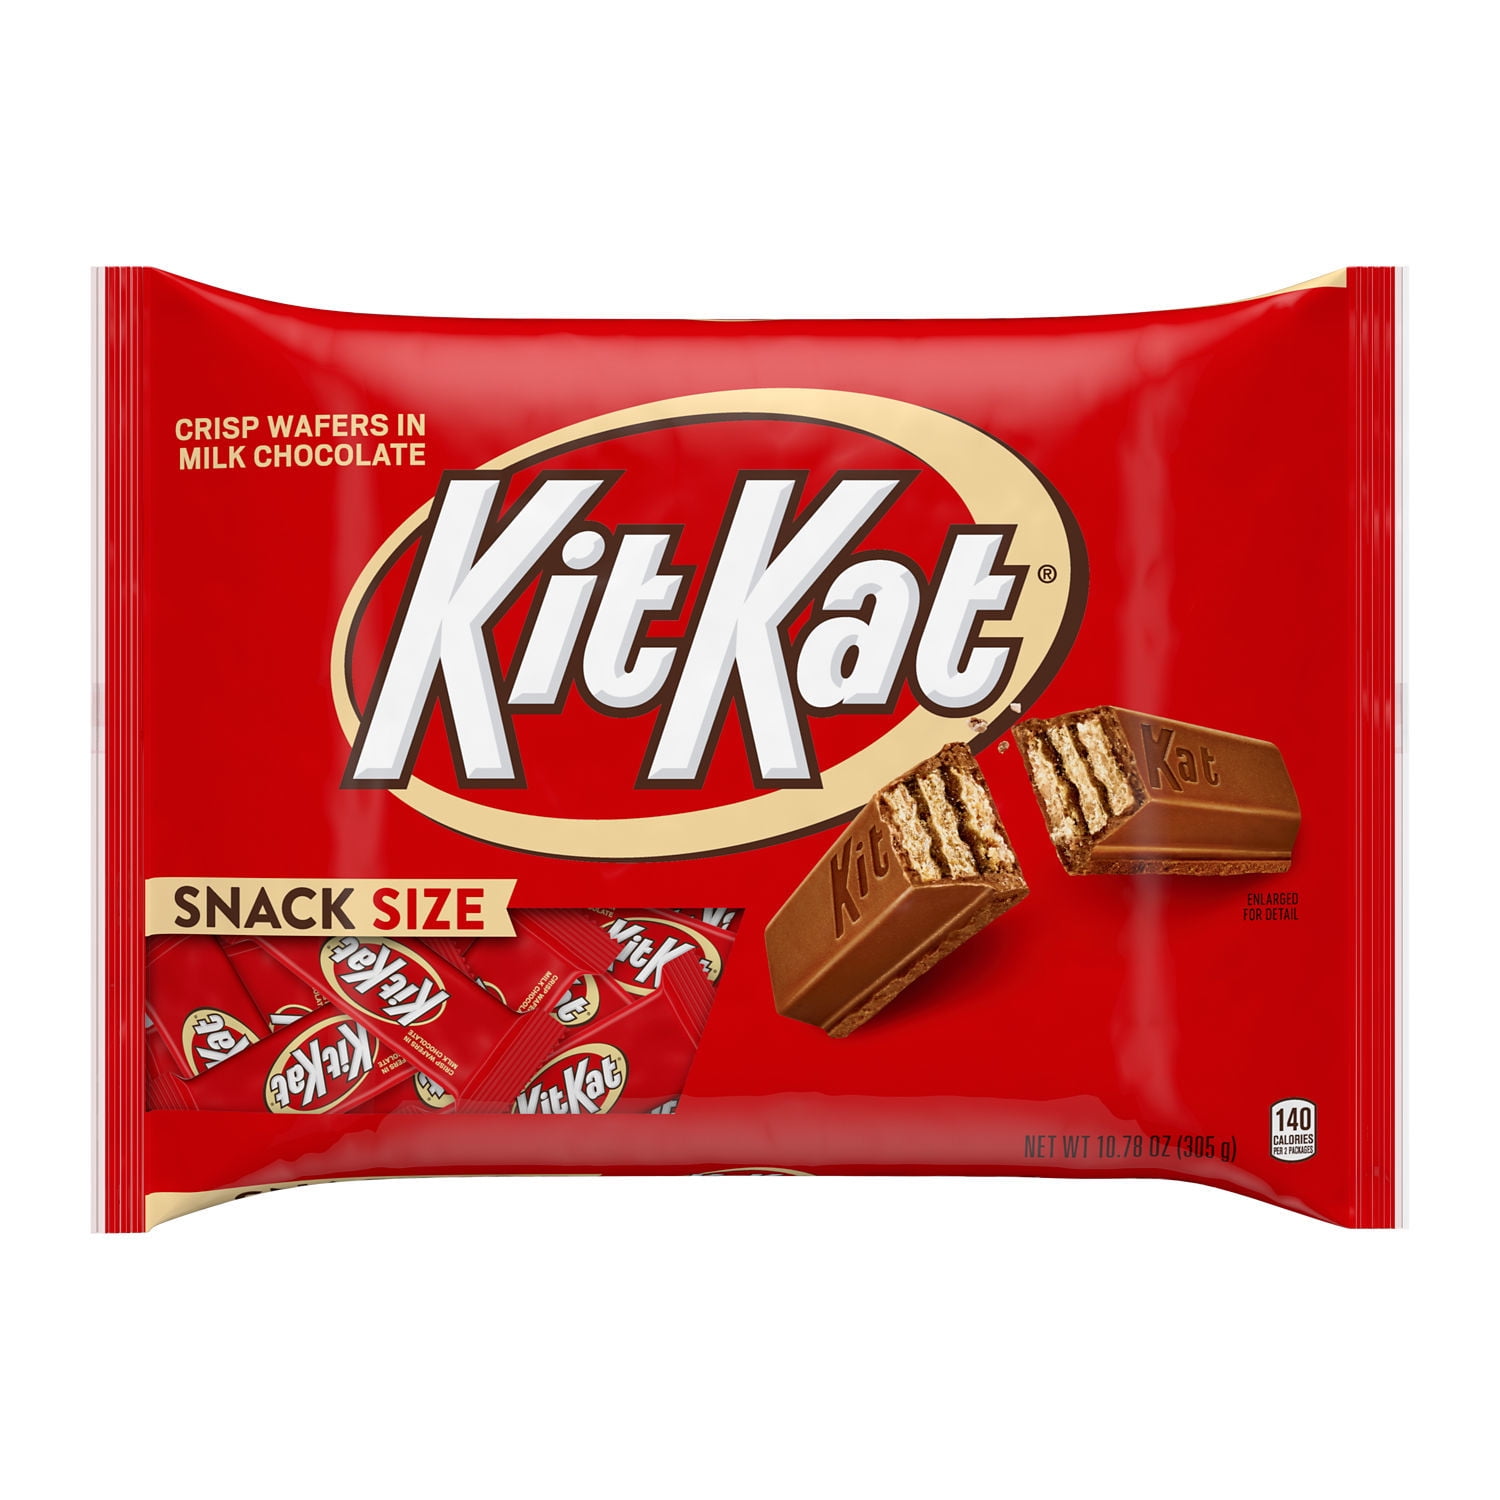 KIT KAT Milk Chocolate Snack Size, Easter Wafer Candy Bars Bag, 10.78 oz